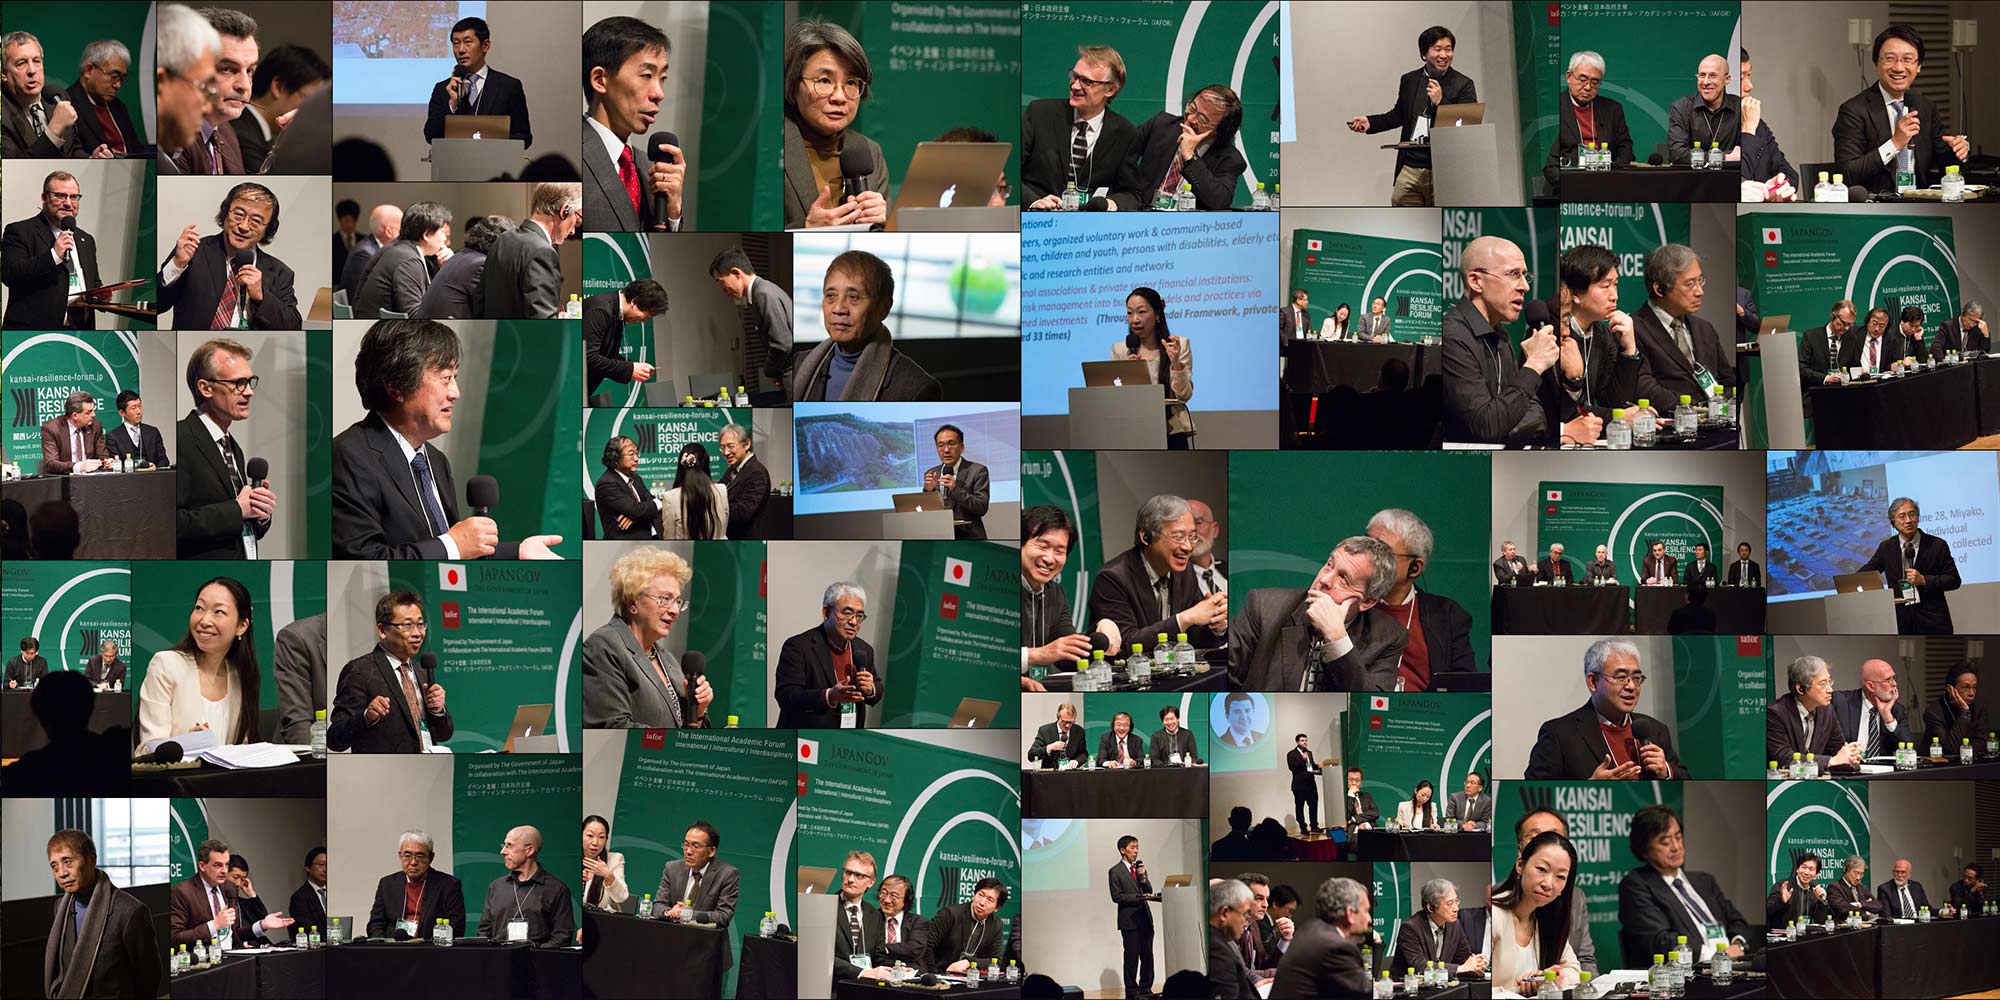 Kansai Resilience Forum 2019 – Video Highlights - The International